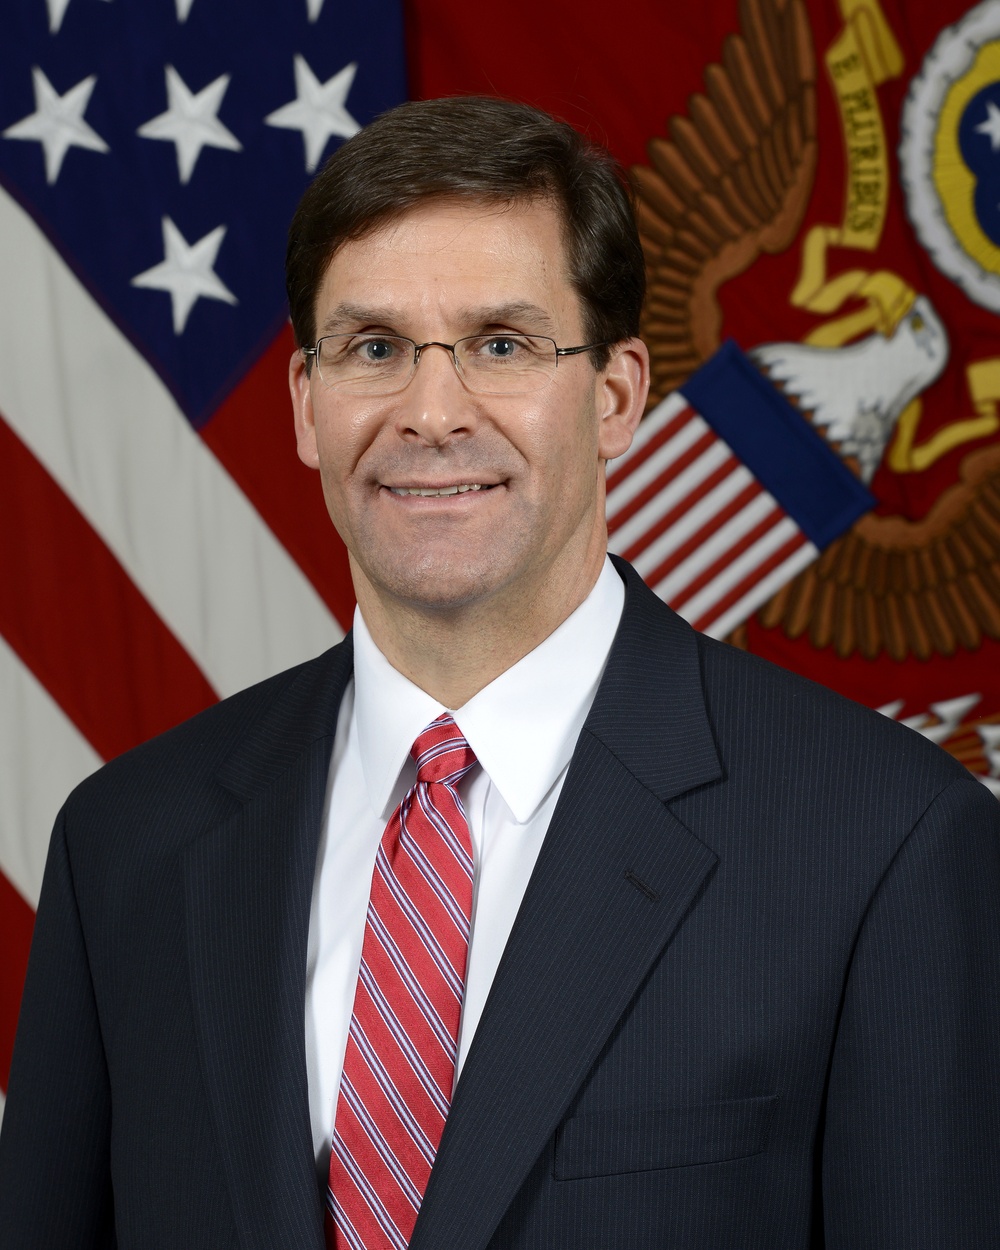 Dr. Mark T. Esper, Secretary of the Army